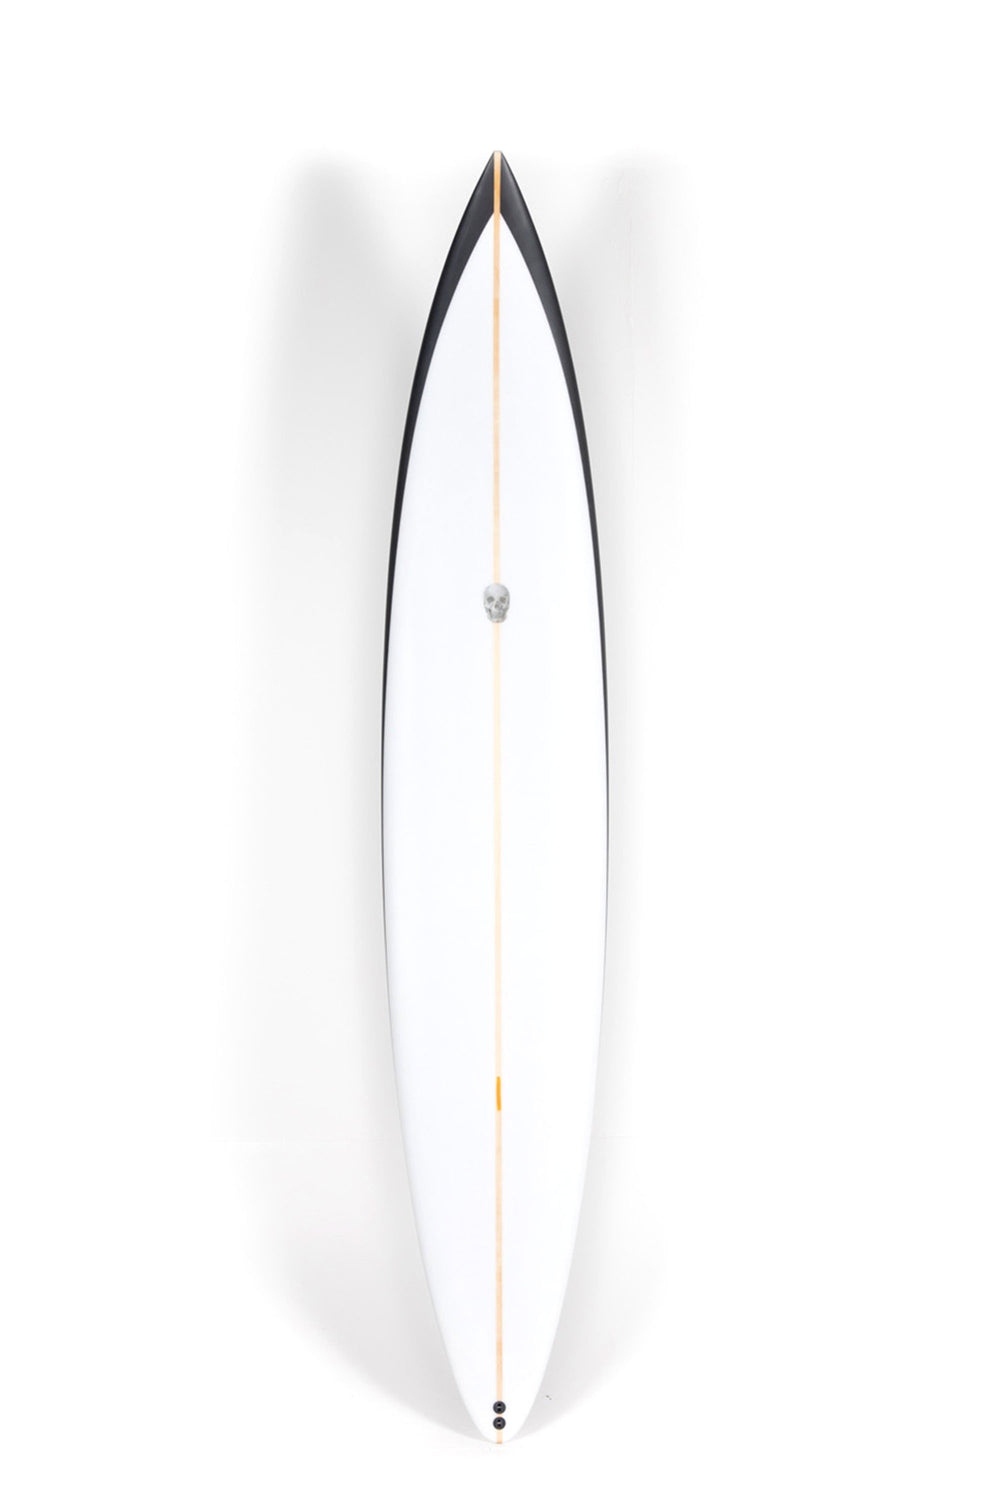 Christenson Surfboards - CARRERA - 9'0